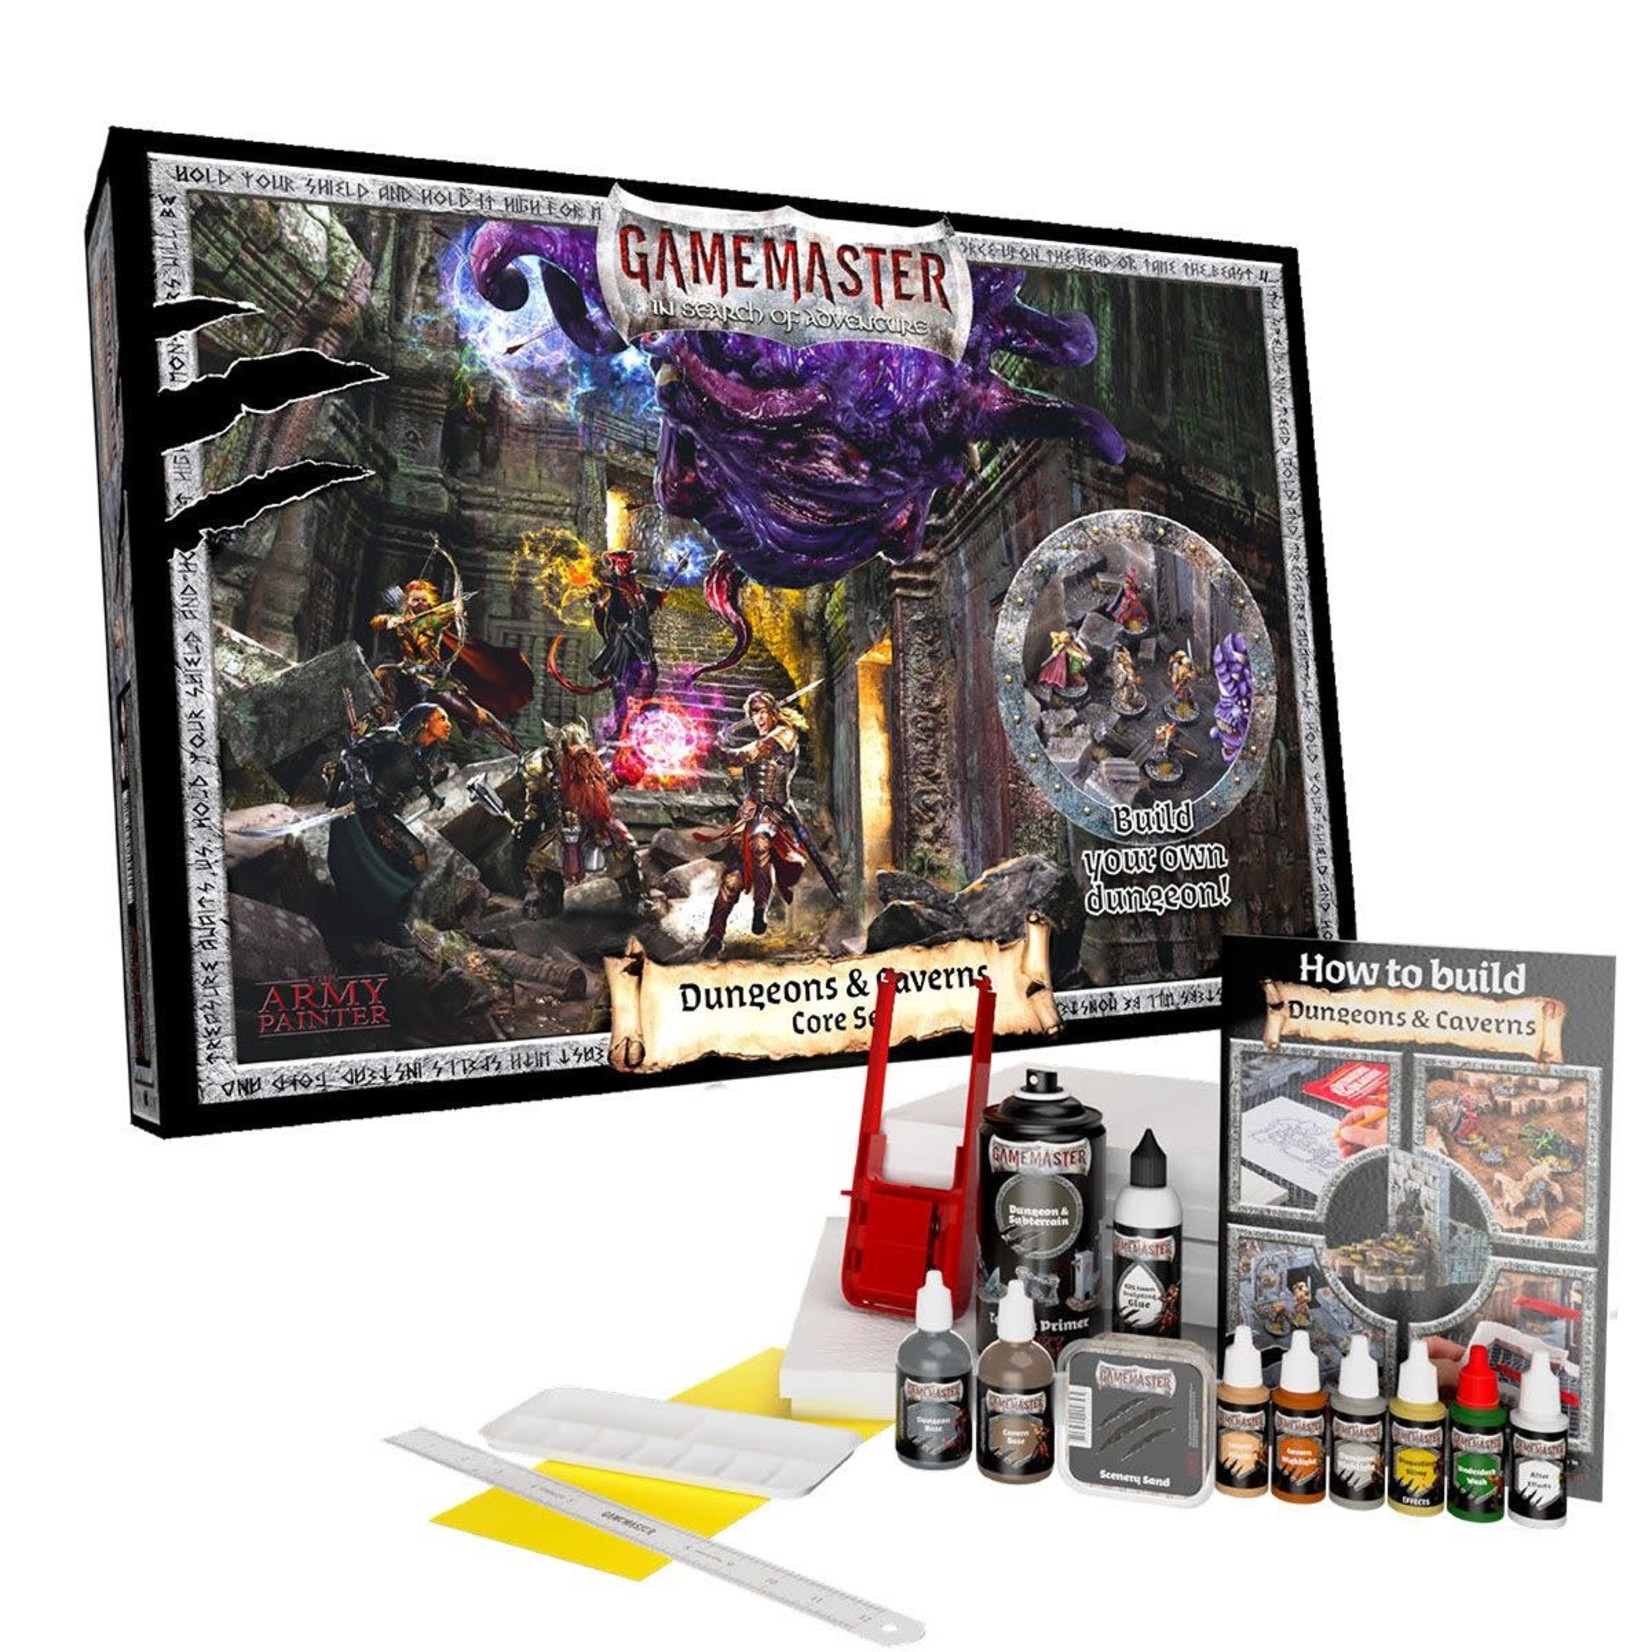 Army Painter Gamemaster Dungeon & Cavern Core Set